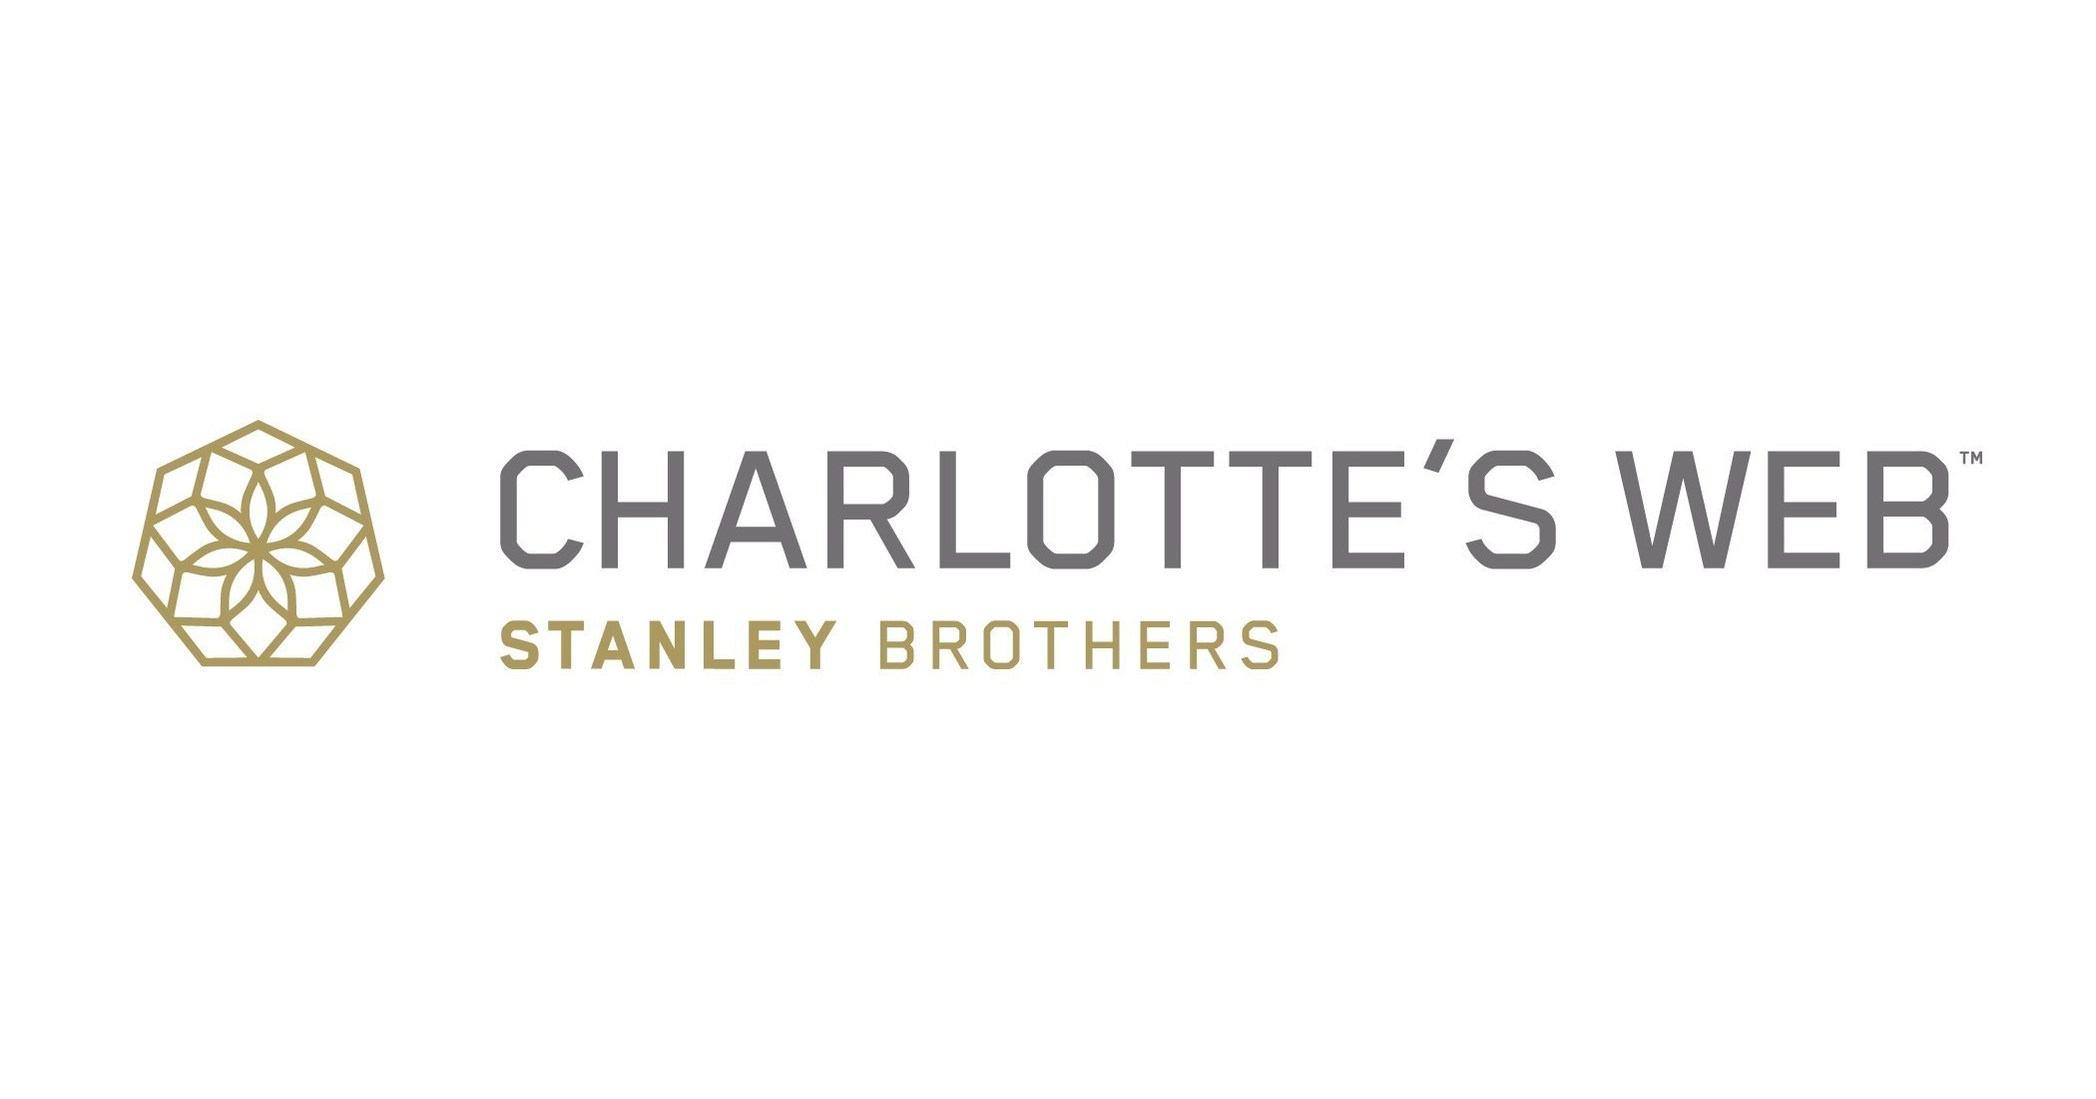  Charlotte's Web Appoints Digital Marketing Executive, Alicia Morga, to Board of Directors 